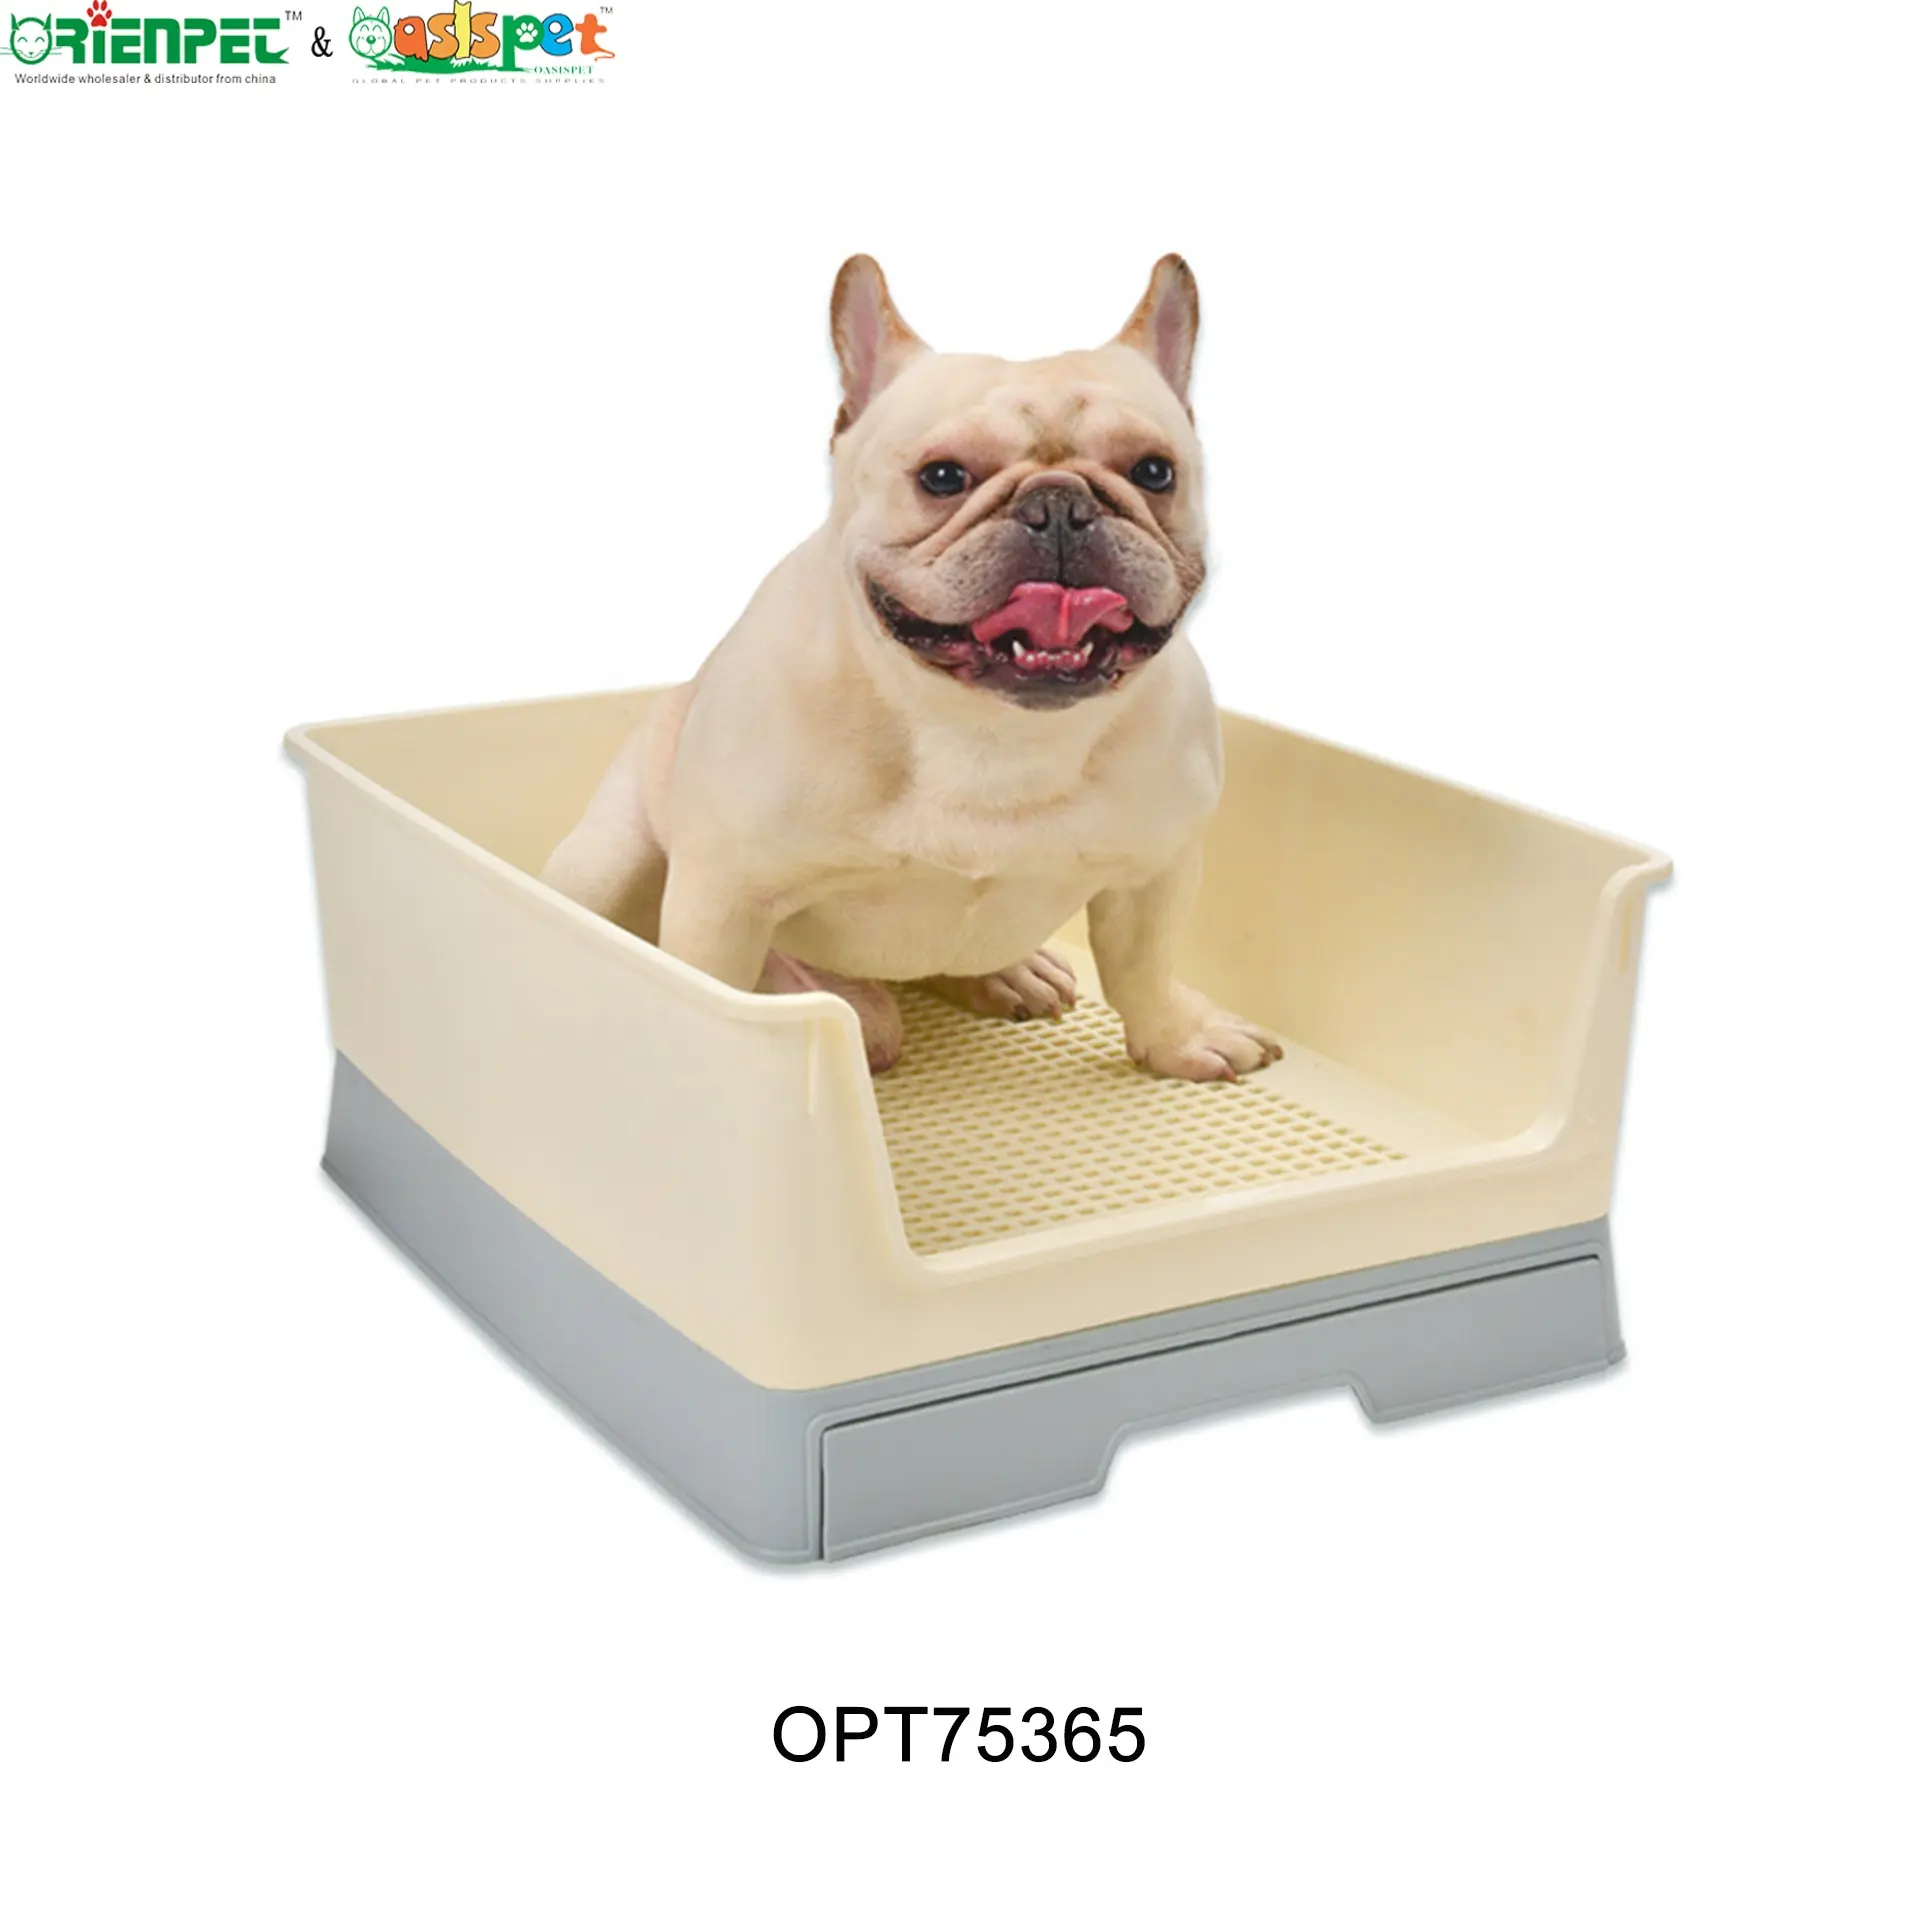 ORTIENPET & OASISPET 반려동물 플라스틱 강아지 화장실 서랍 준비 재고 OPT75365 반려동물 제품